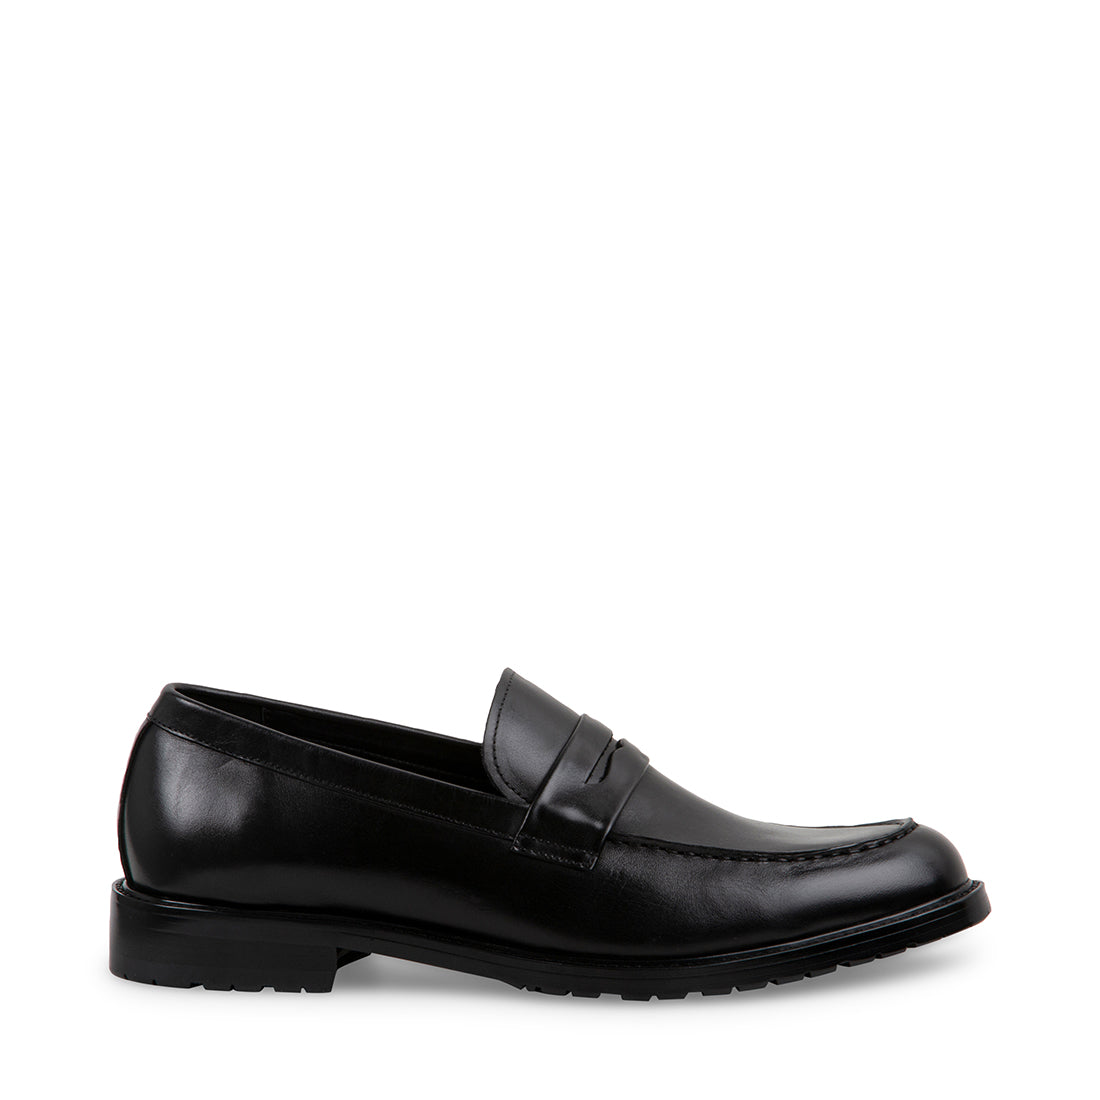 TARRIN Black Leather Men's Dress Shoes | Men's Designer Dress Shoes ...